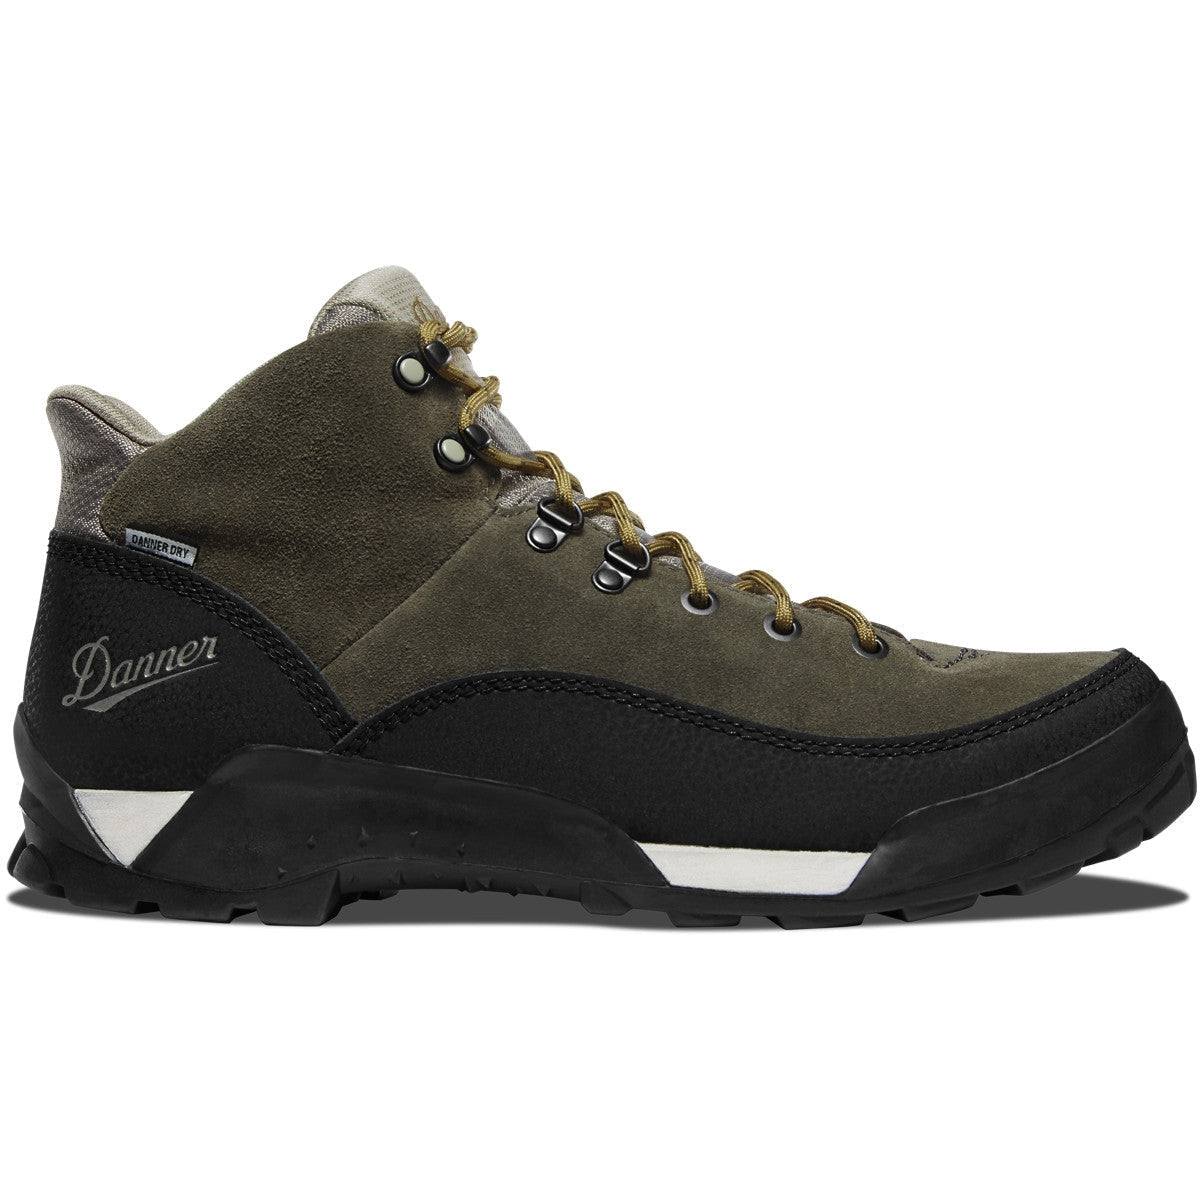 Danner Men's Panorama 6" Waterproof Hiking Shoe - Black Olive - 63435 7 / Medium / Black Olive - Overlook Boots